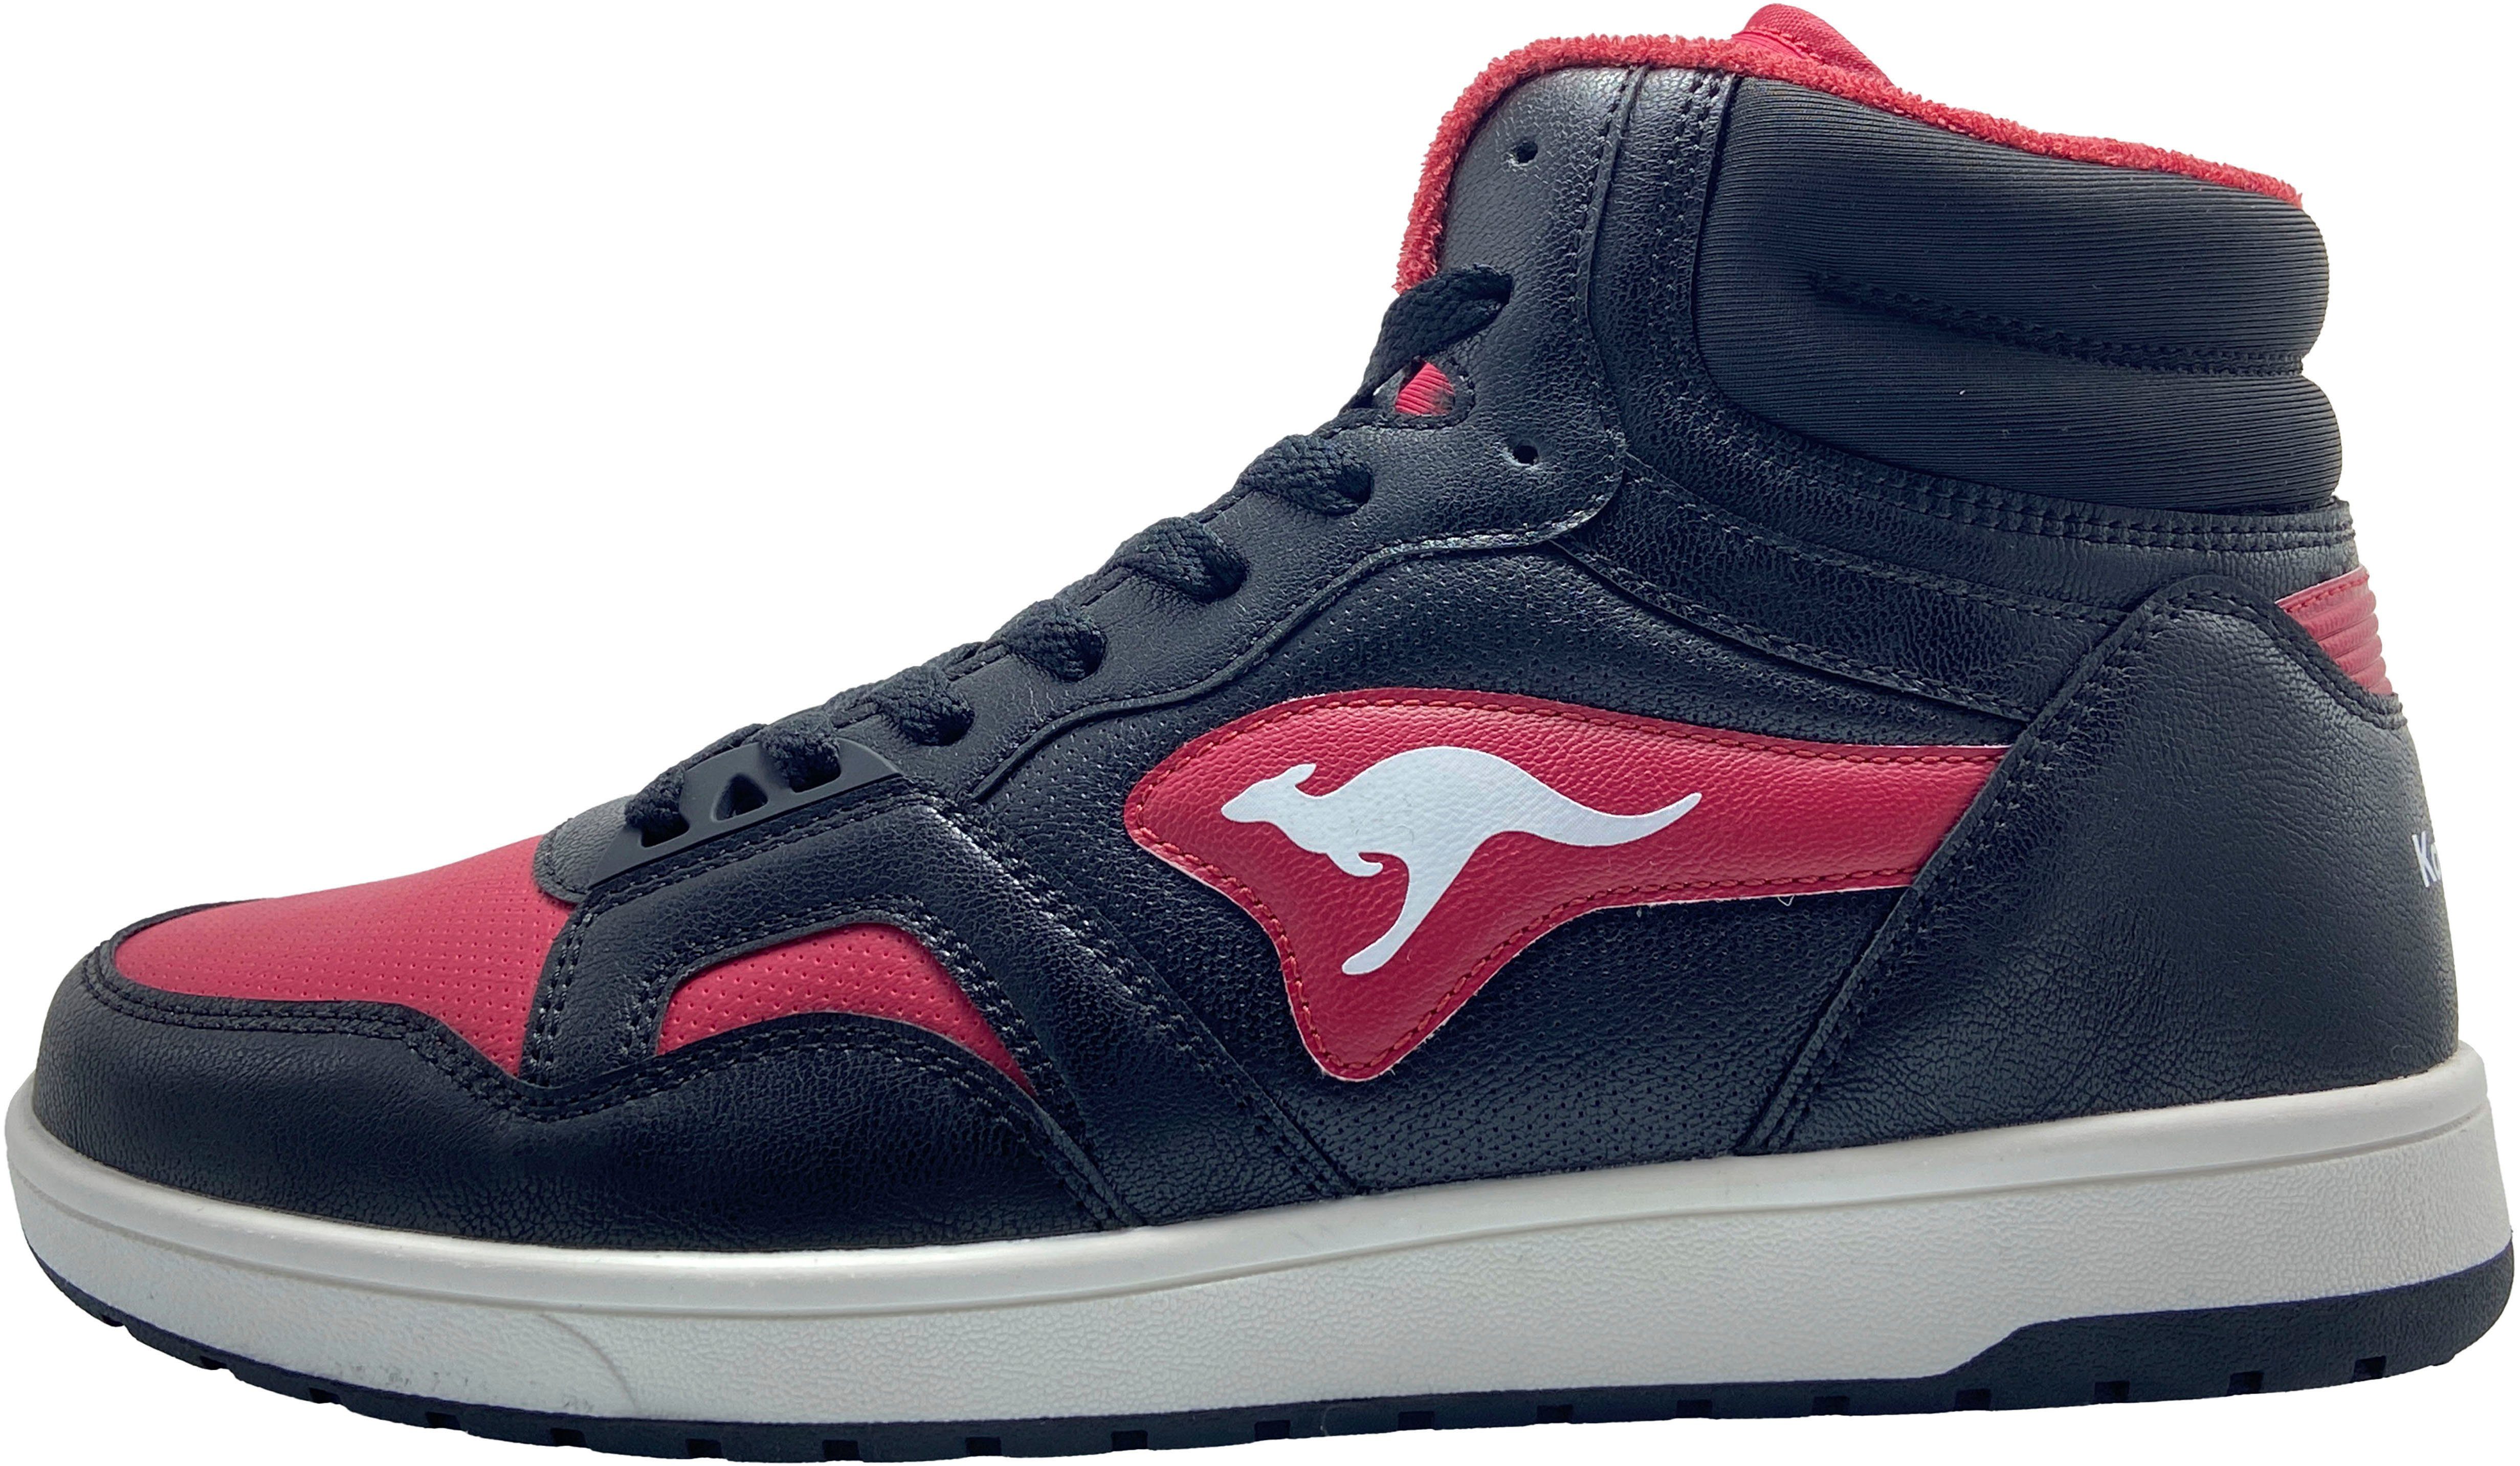 Mid Point KangaROOS K-Slam schwarz-rot Sneaker